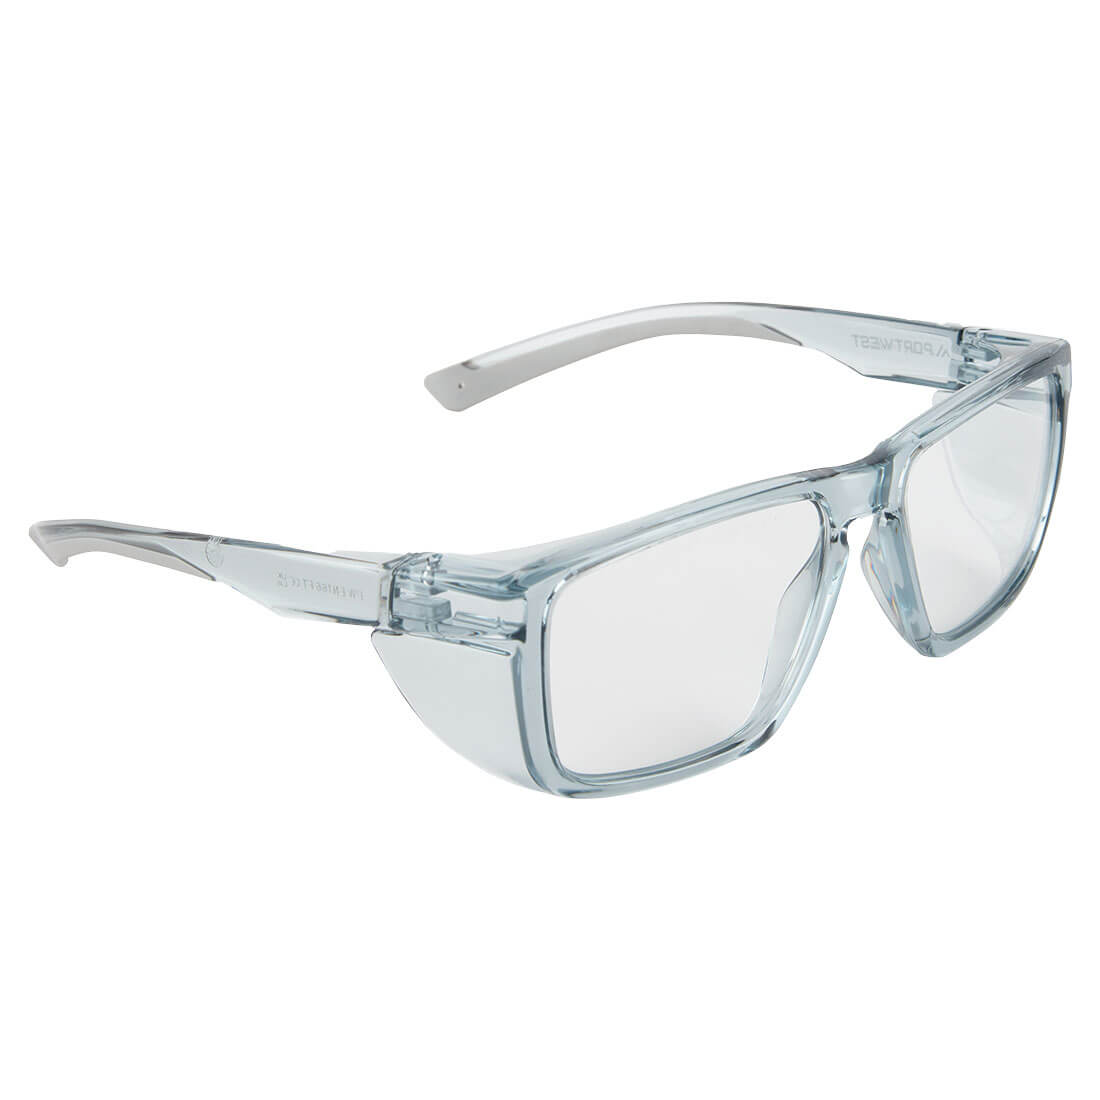 Portwest Side Shields Safety Glasses